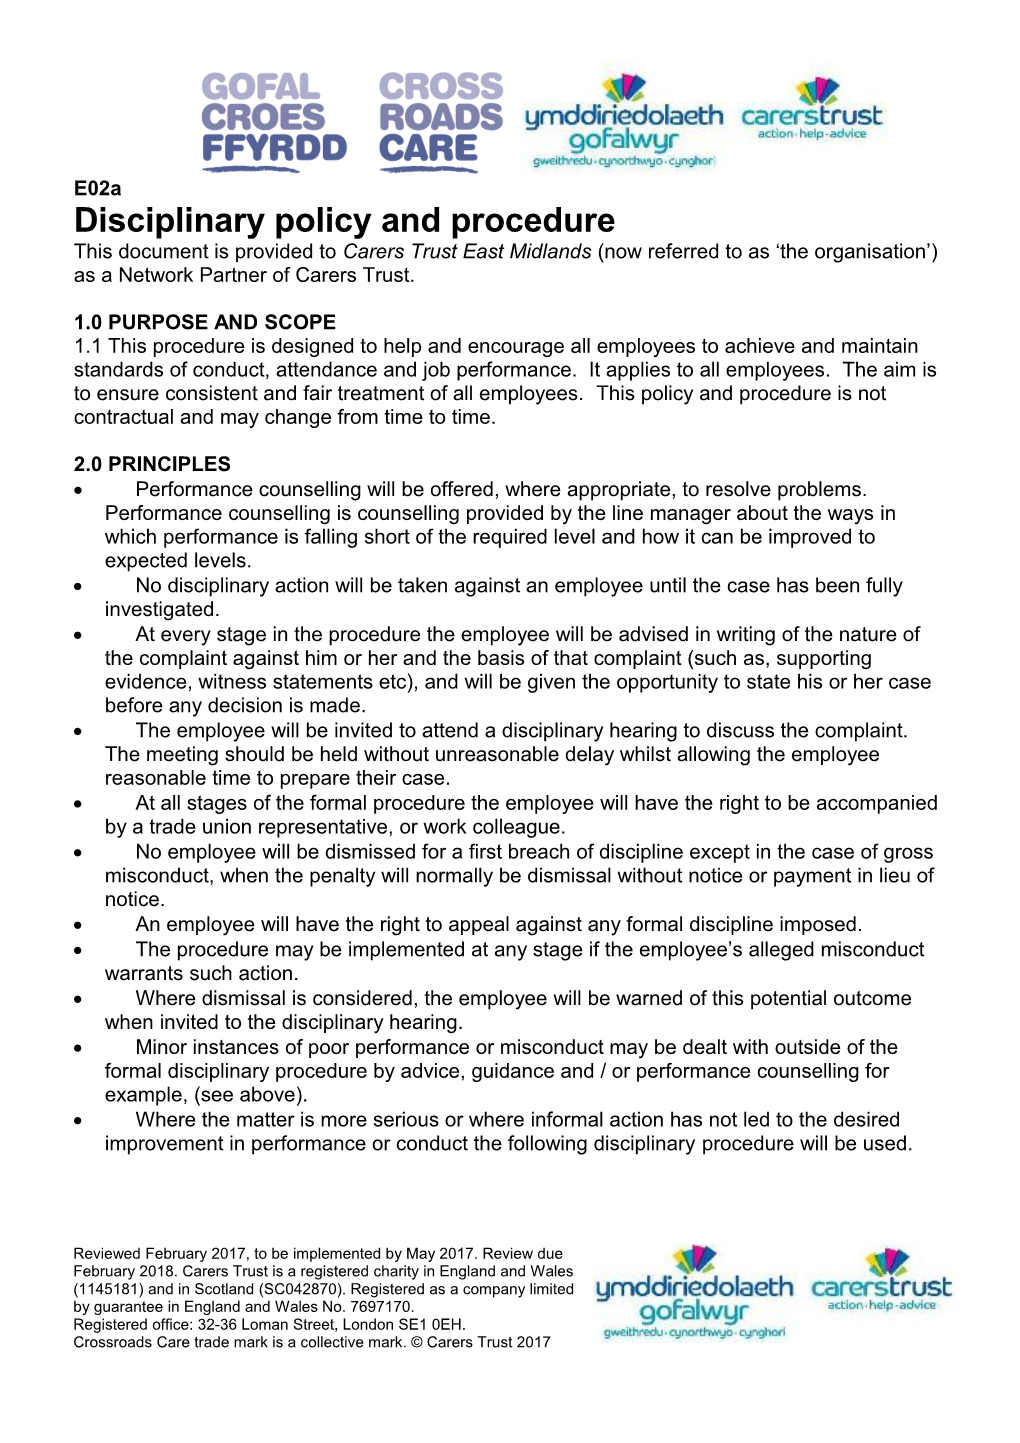 Carers Trustdisciplinary Policy and Procedure